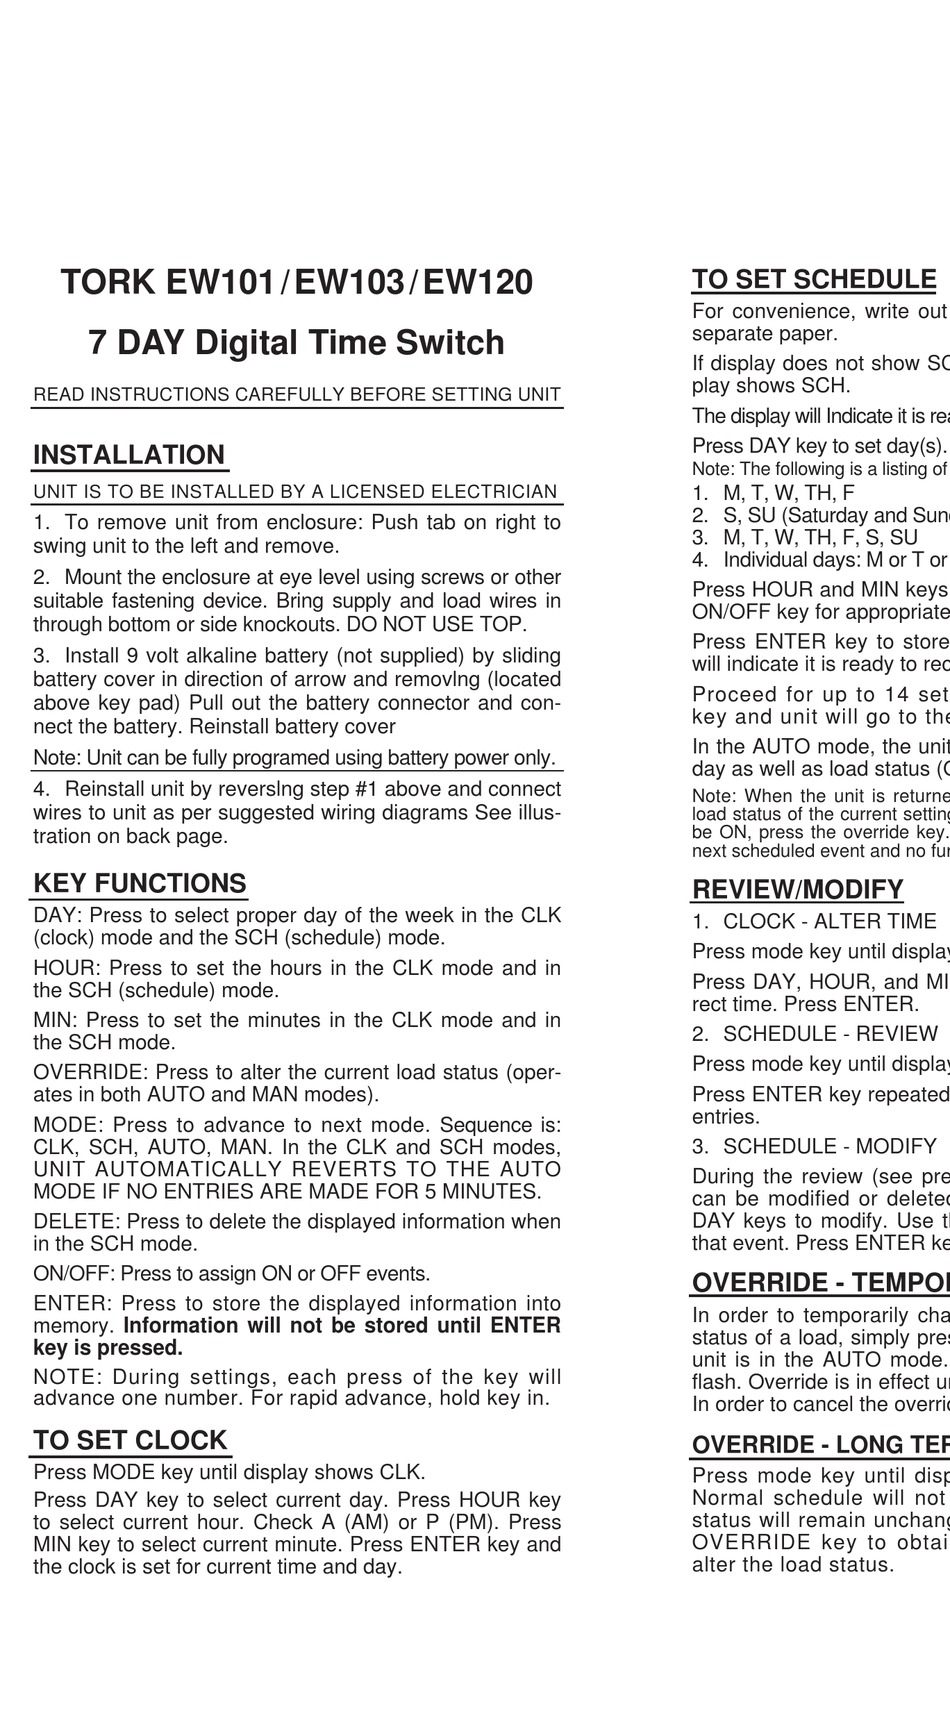 TORK EW101 MANUAL Pdf Download | ManualsLib